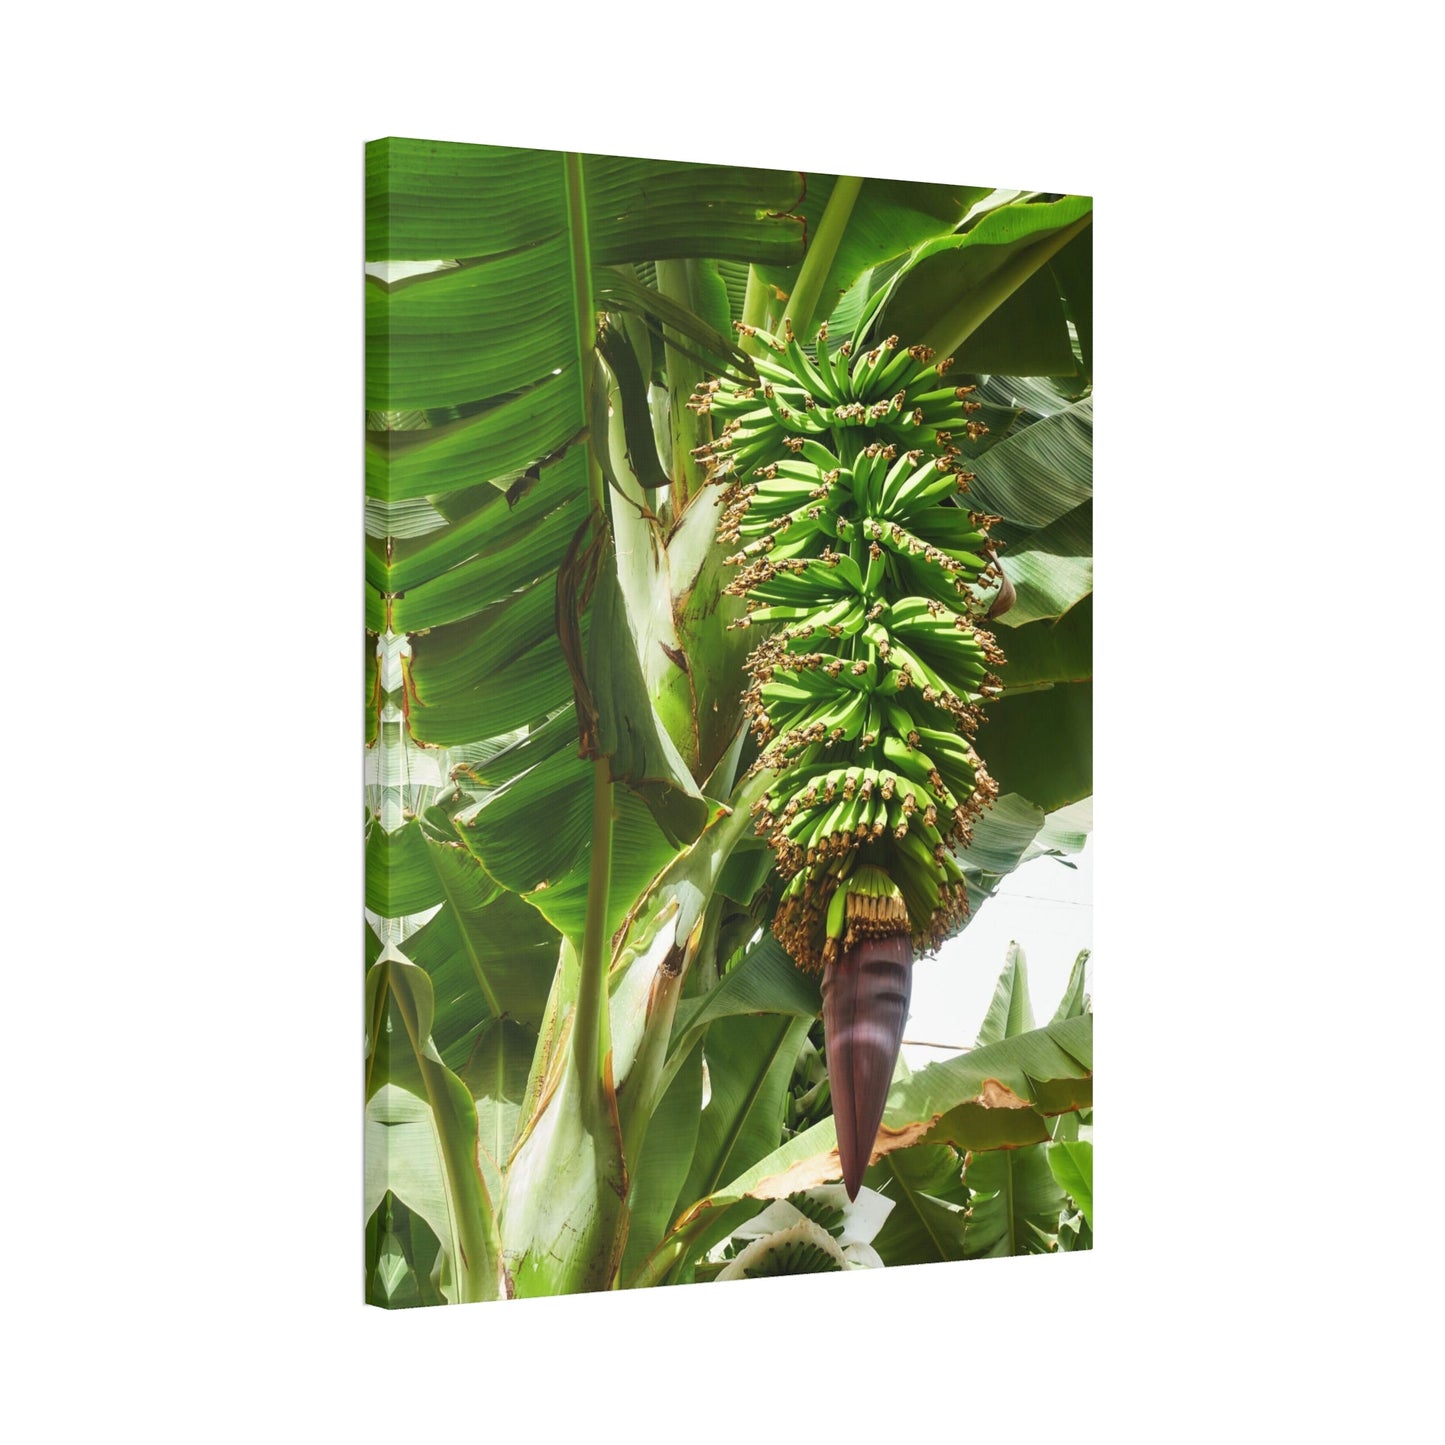 Tropics Calling: Canvas Art with Vibrant Banana Trees in a Jungle Setting